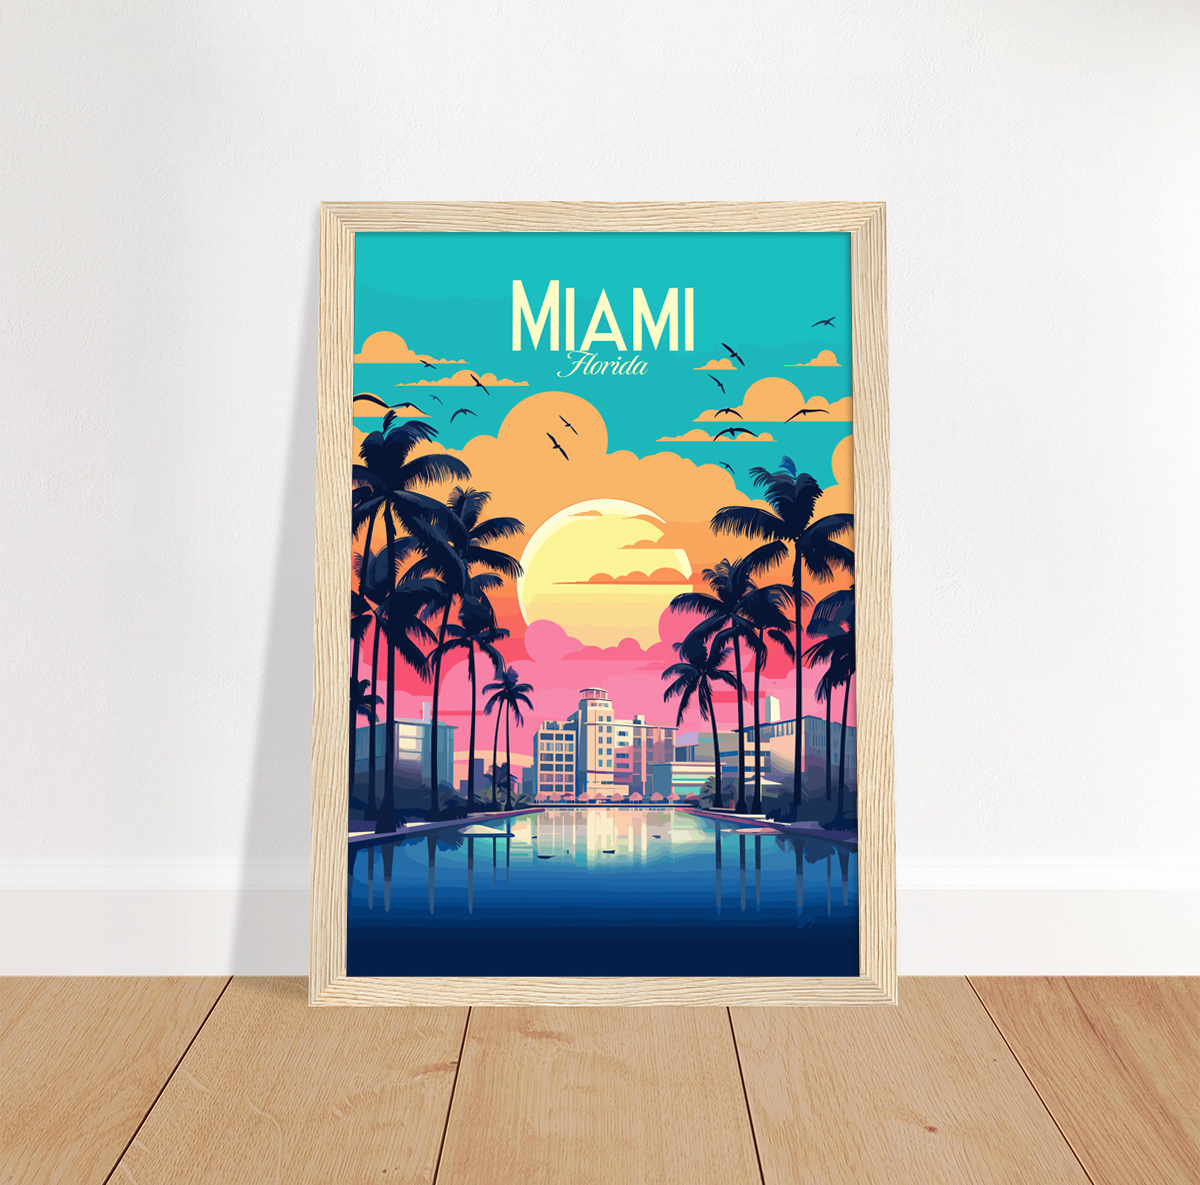 Miami Beach poster by bon voyage design